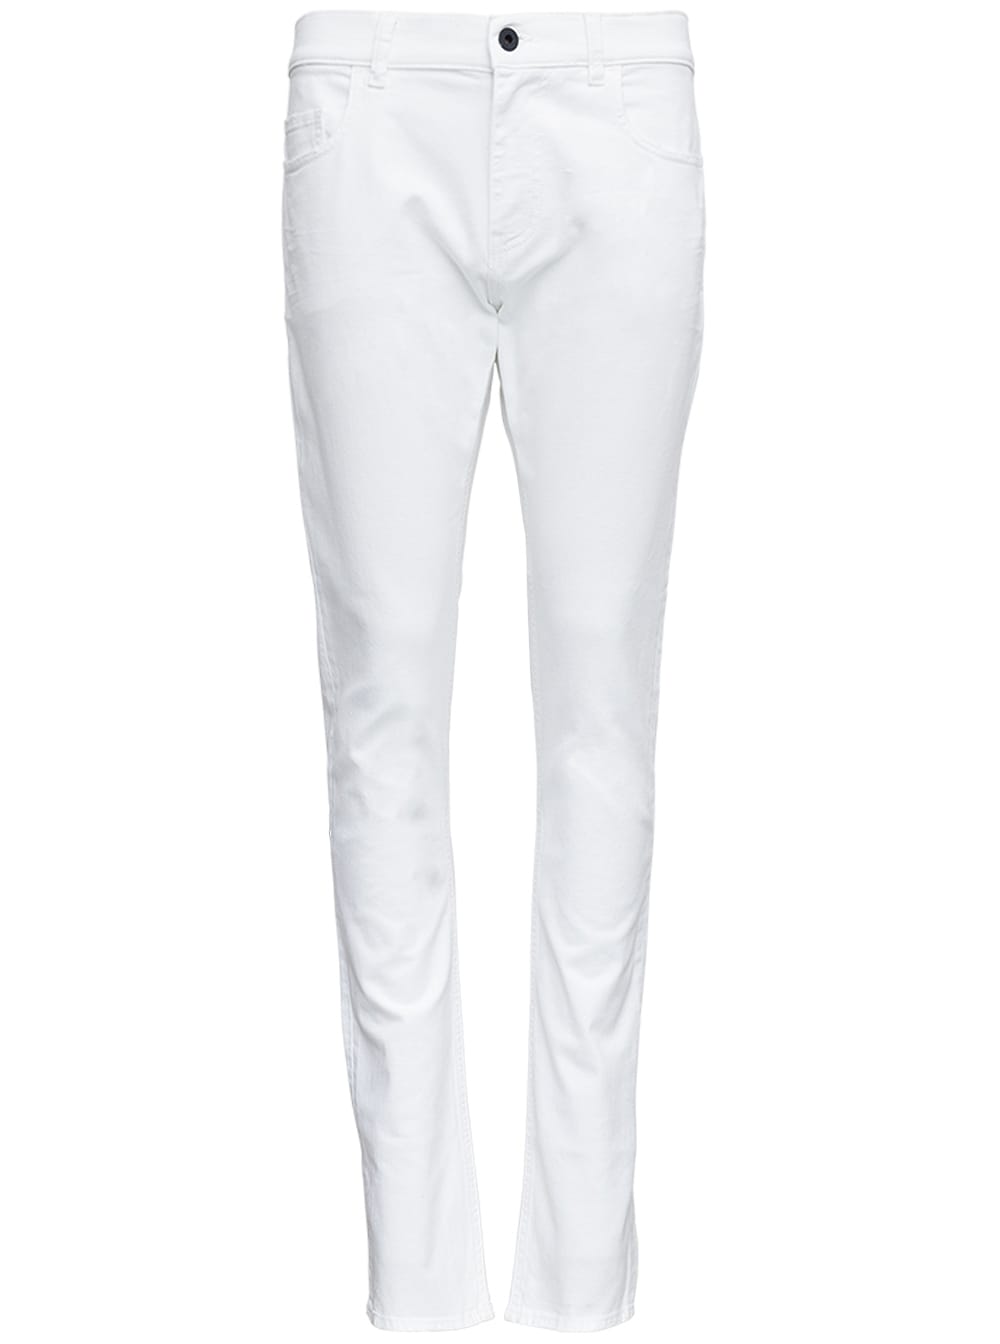 Pence Tosco White Denim Jeans